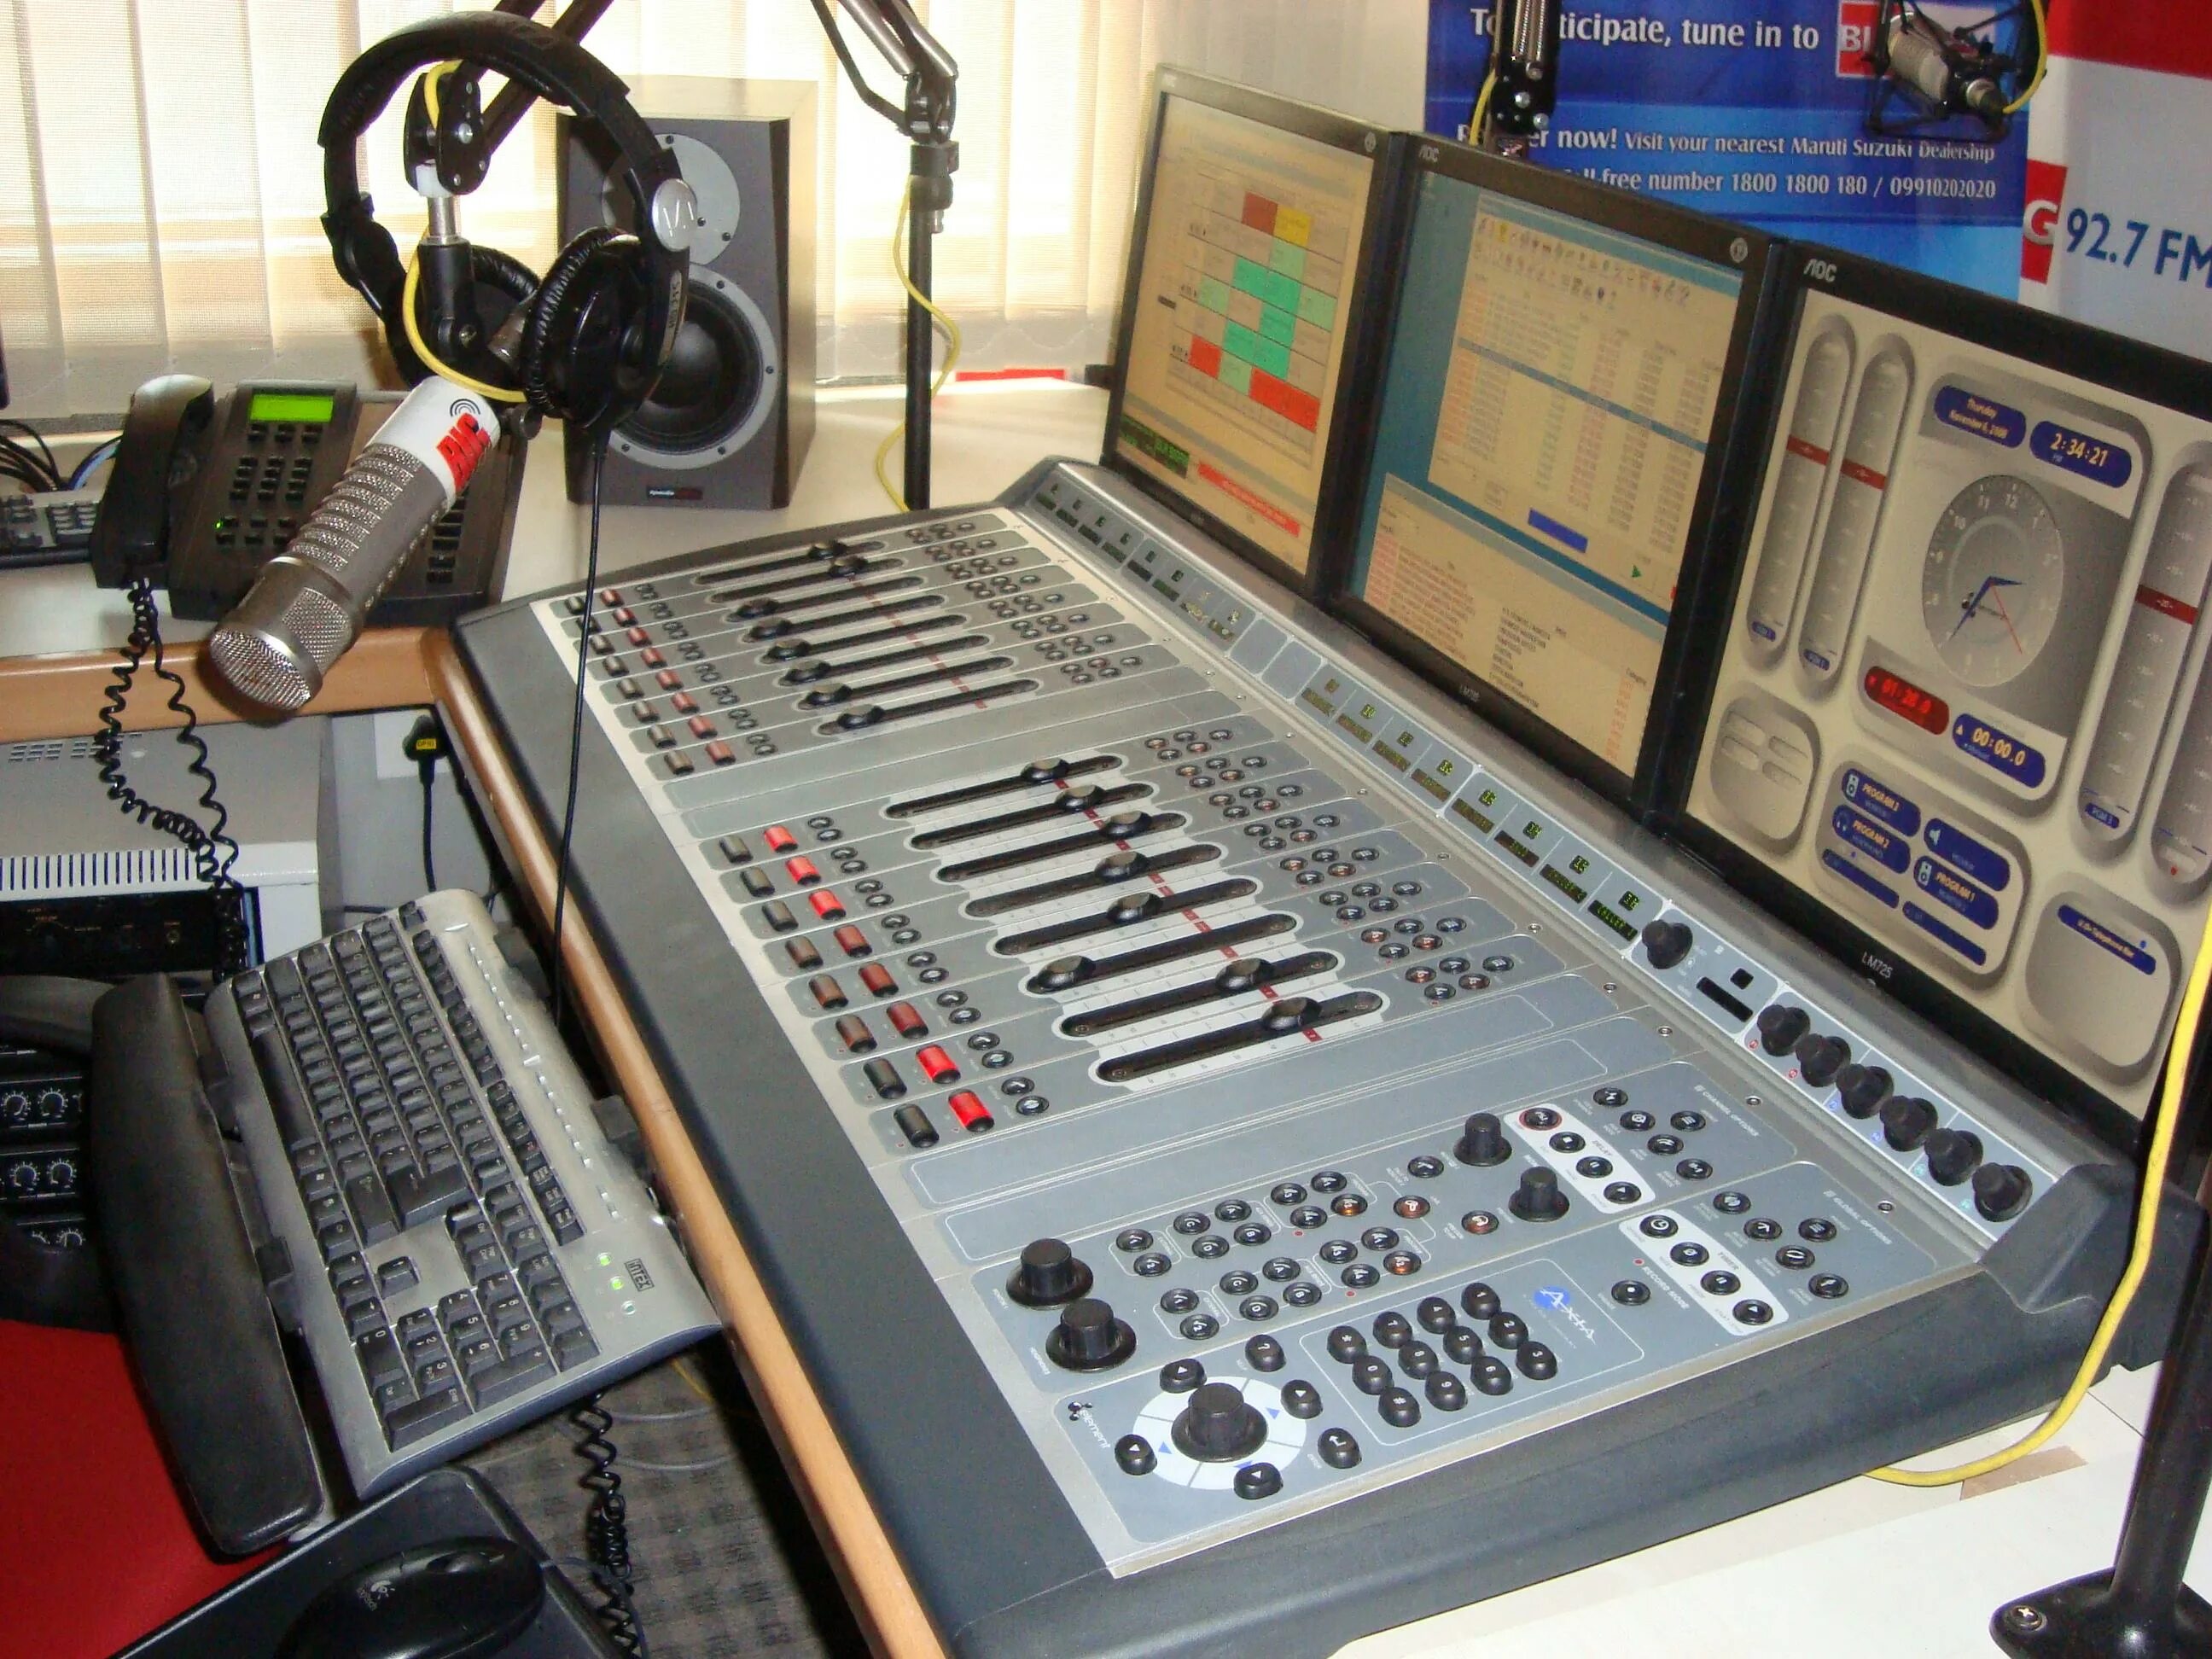 Fm станции. RS 23 Radio Stations. Indoor Radio Stations. Румор Медиа радио. Tfn tune